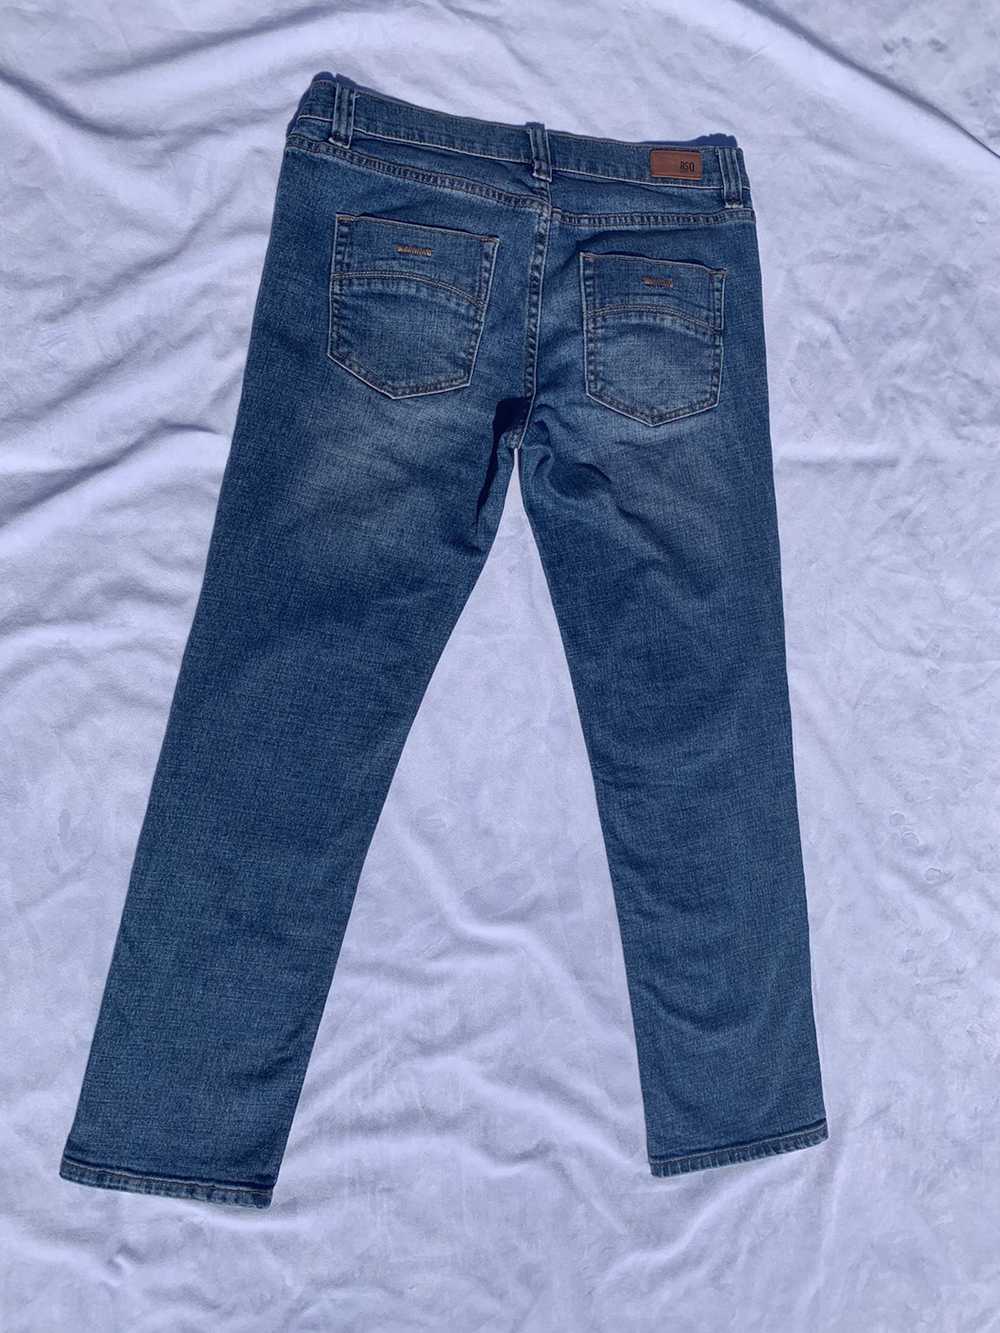 Rsq RSQ Mens Slim Straight Jeans - image 2